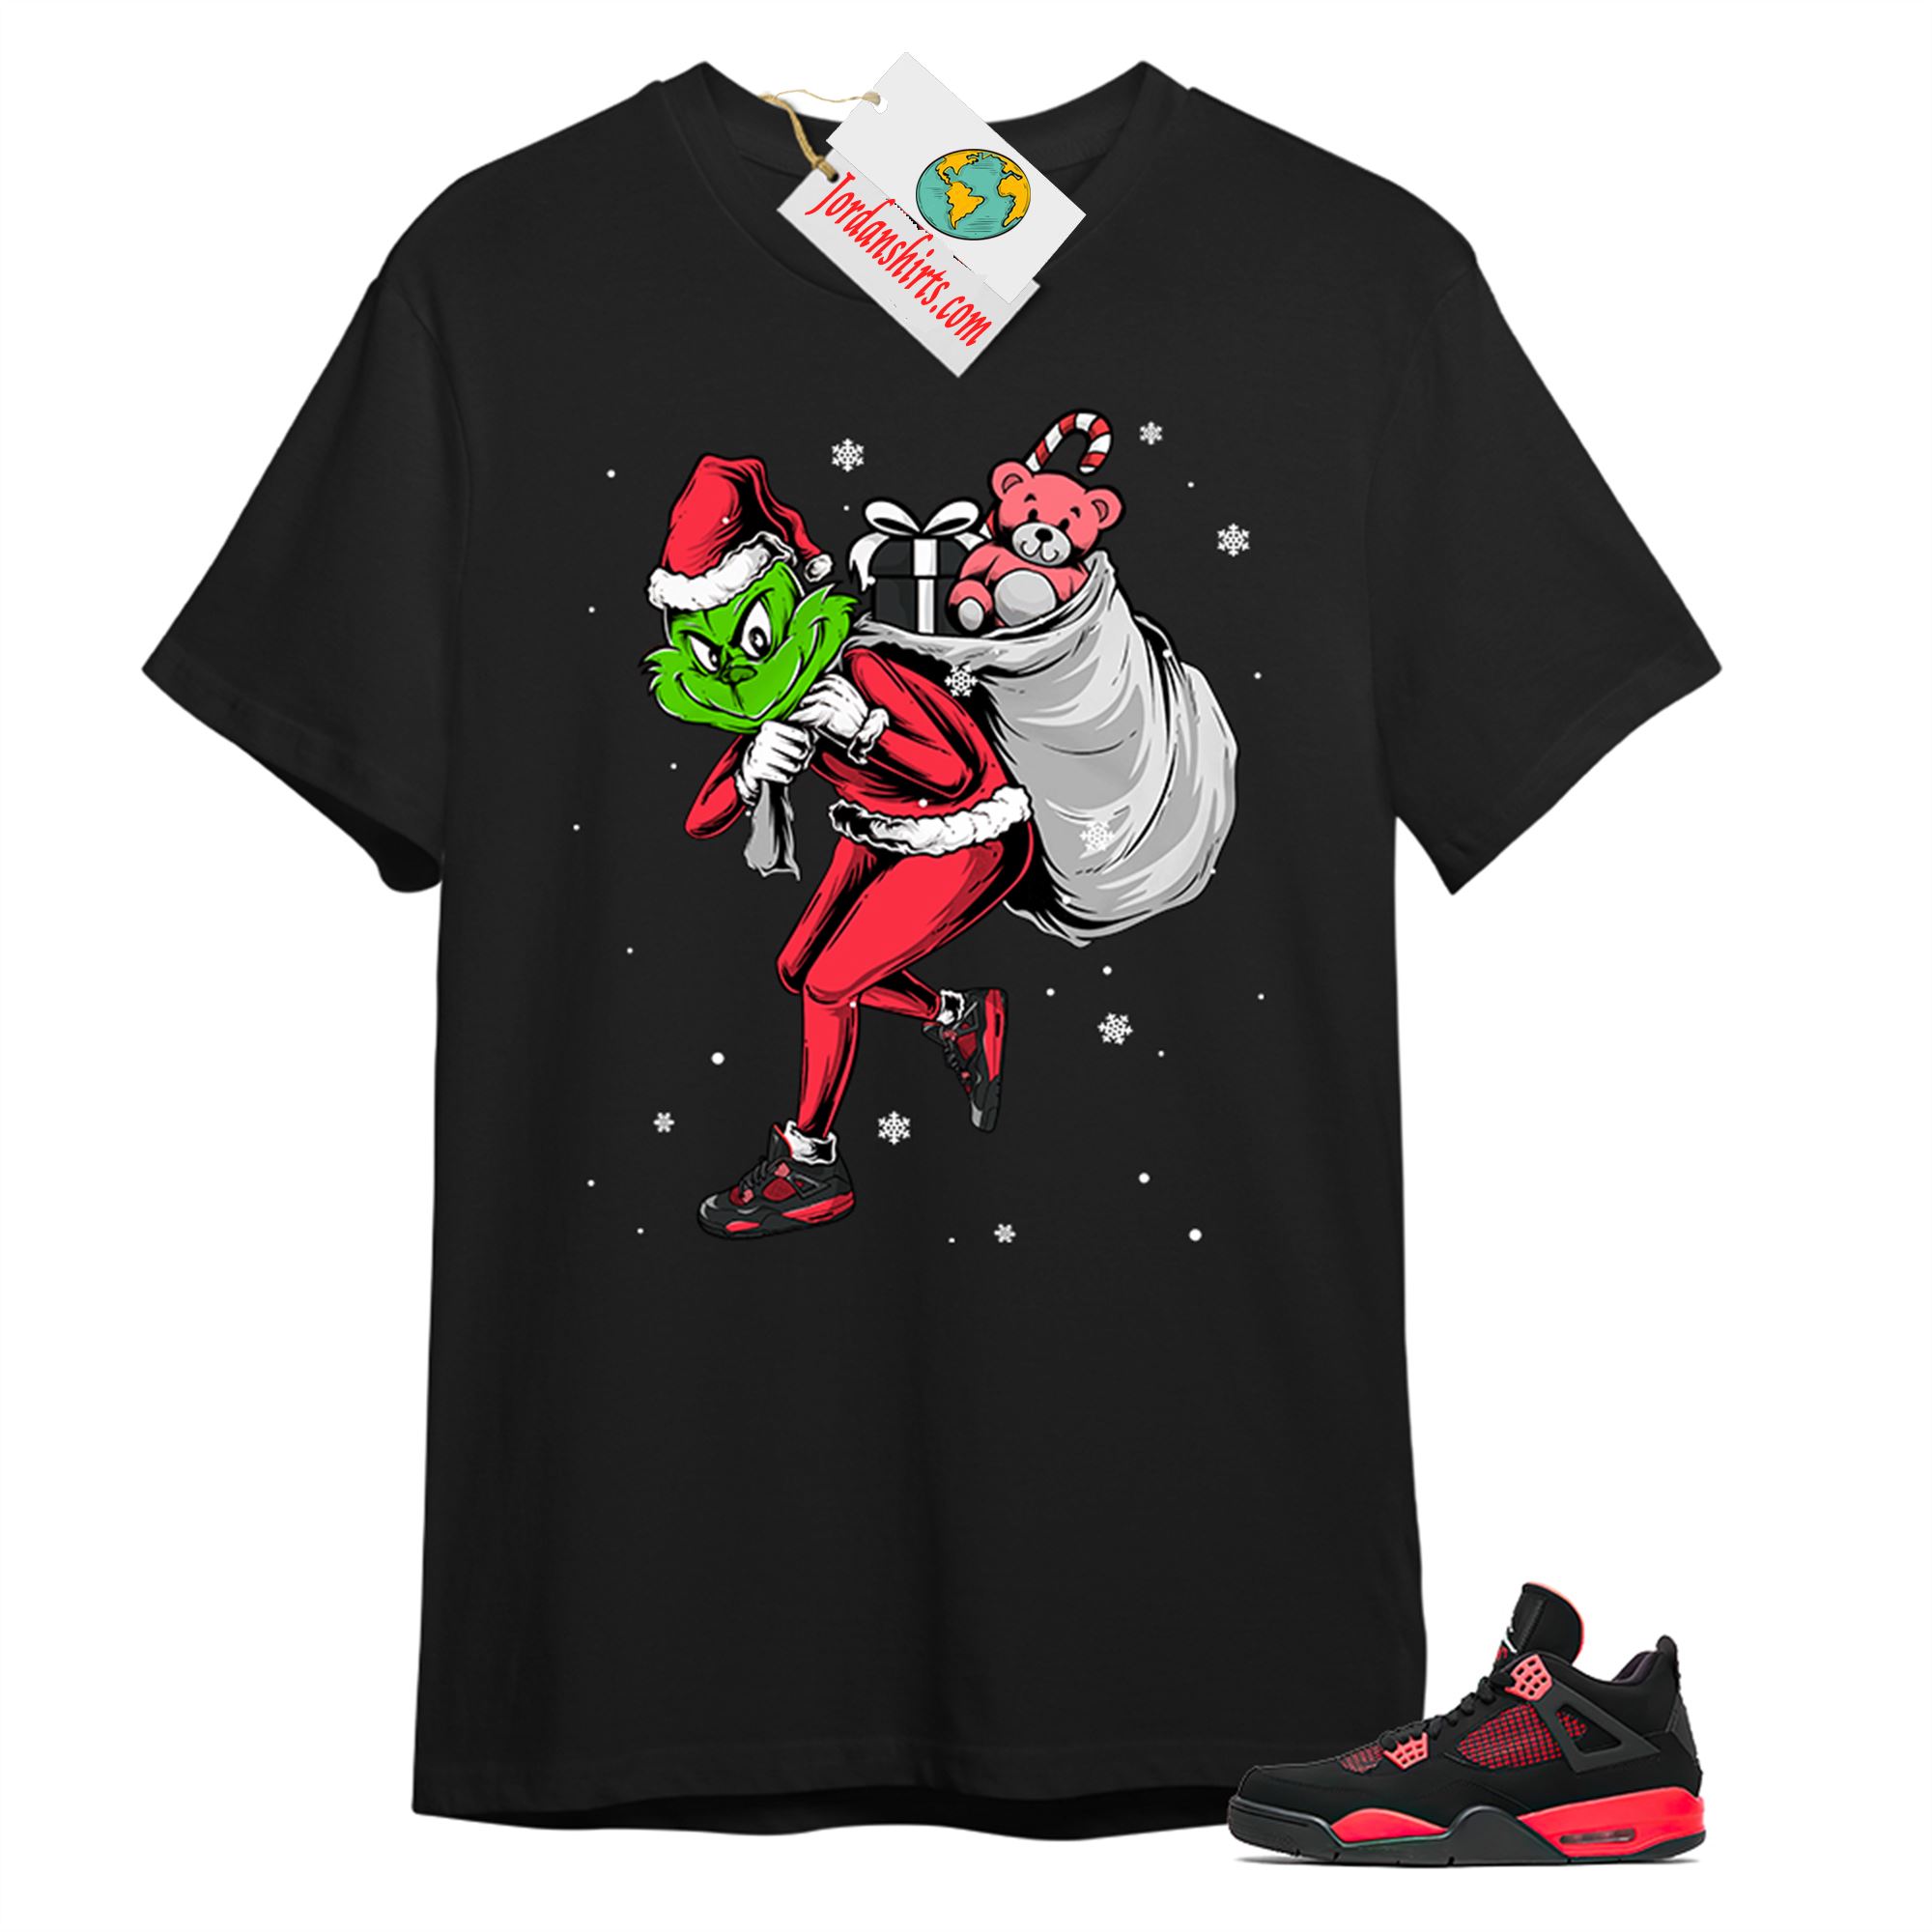 Jordan 4 Shirt, Grinch Stolen Christmas Black T-shirt Air Jordan 4 Red Thunder 4s Full Size Up To 5xl